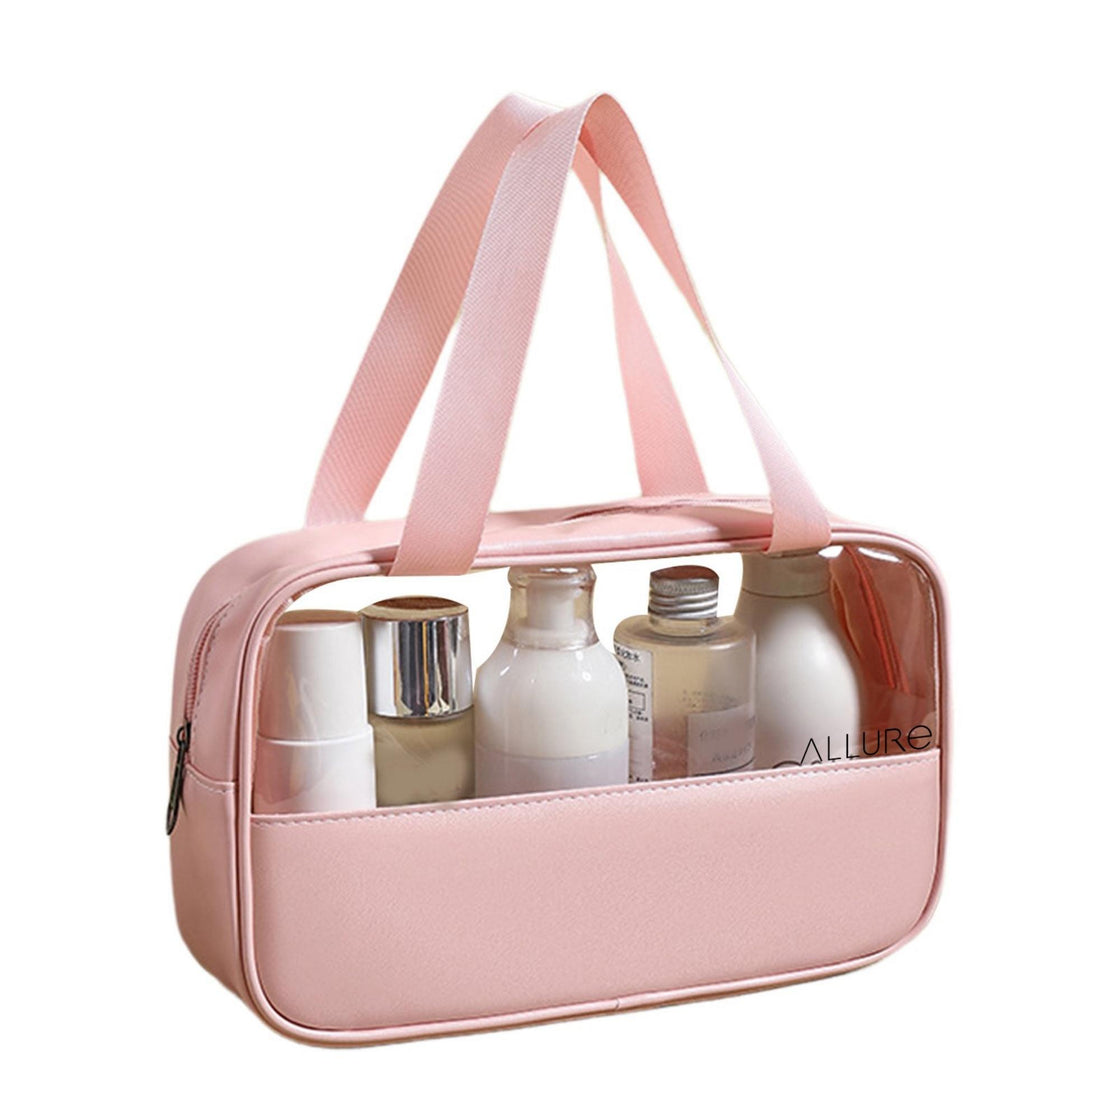 Buy Allure Toiletry Bag medium Pink Online in India - Allure Cosmetics -  Allure